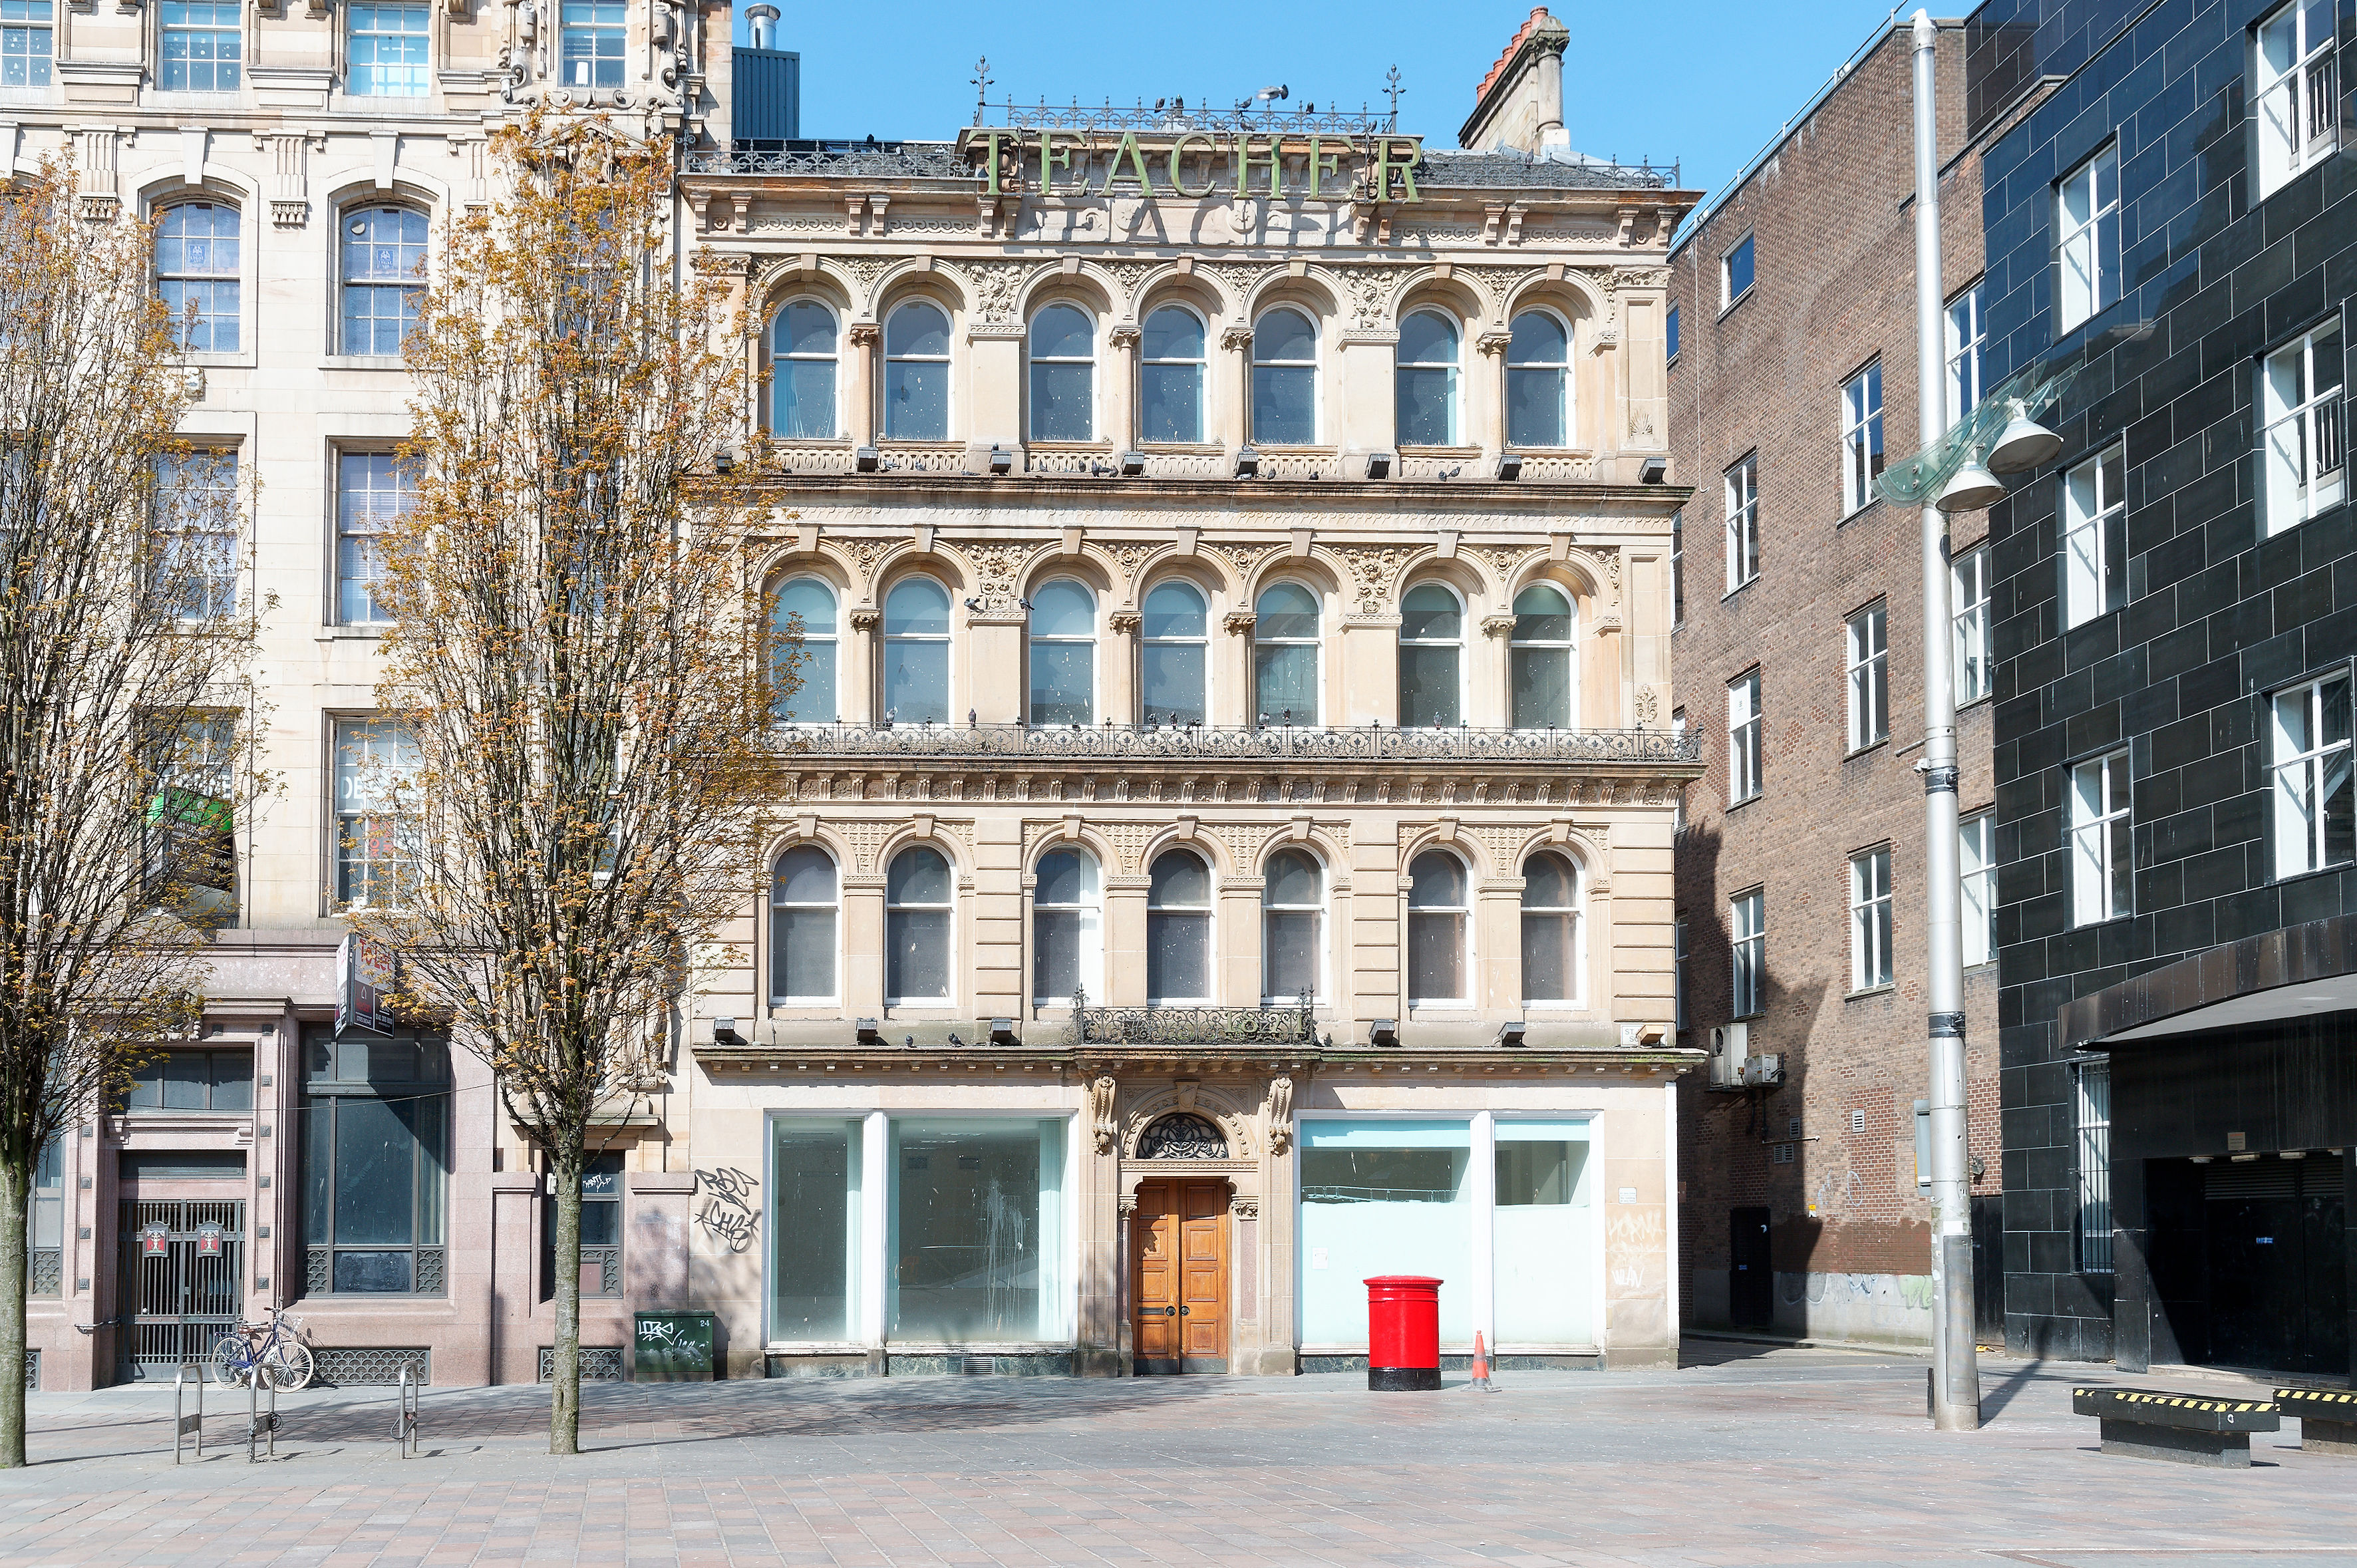 Bids sought for Glasgow’s Teacher building